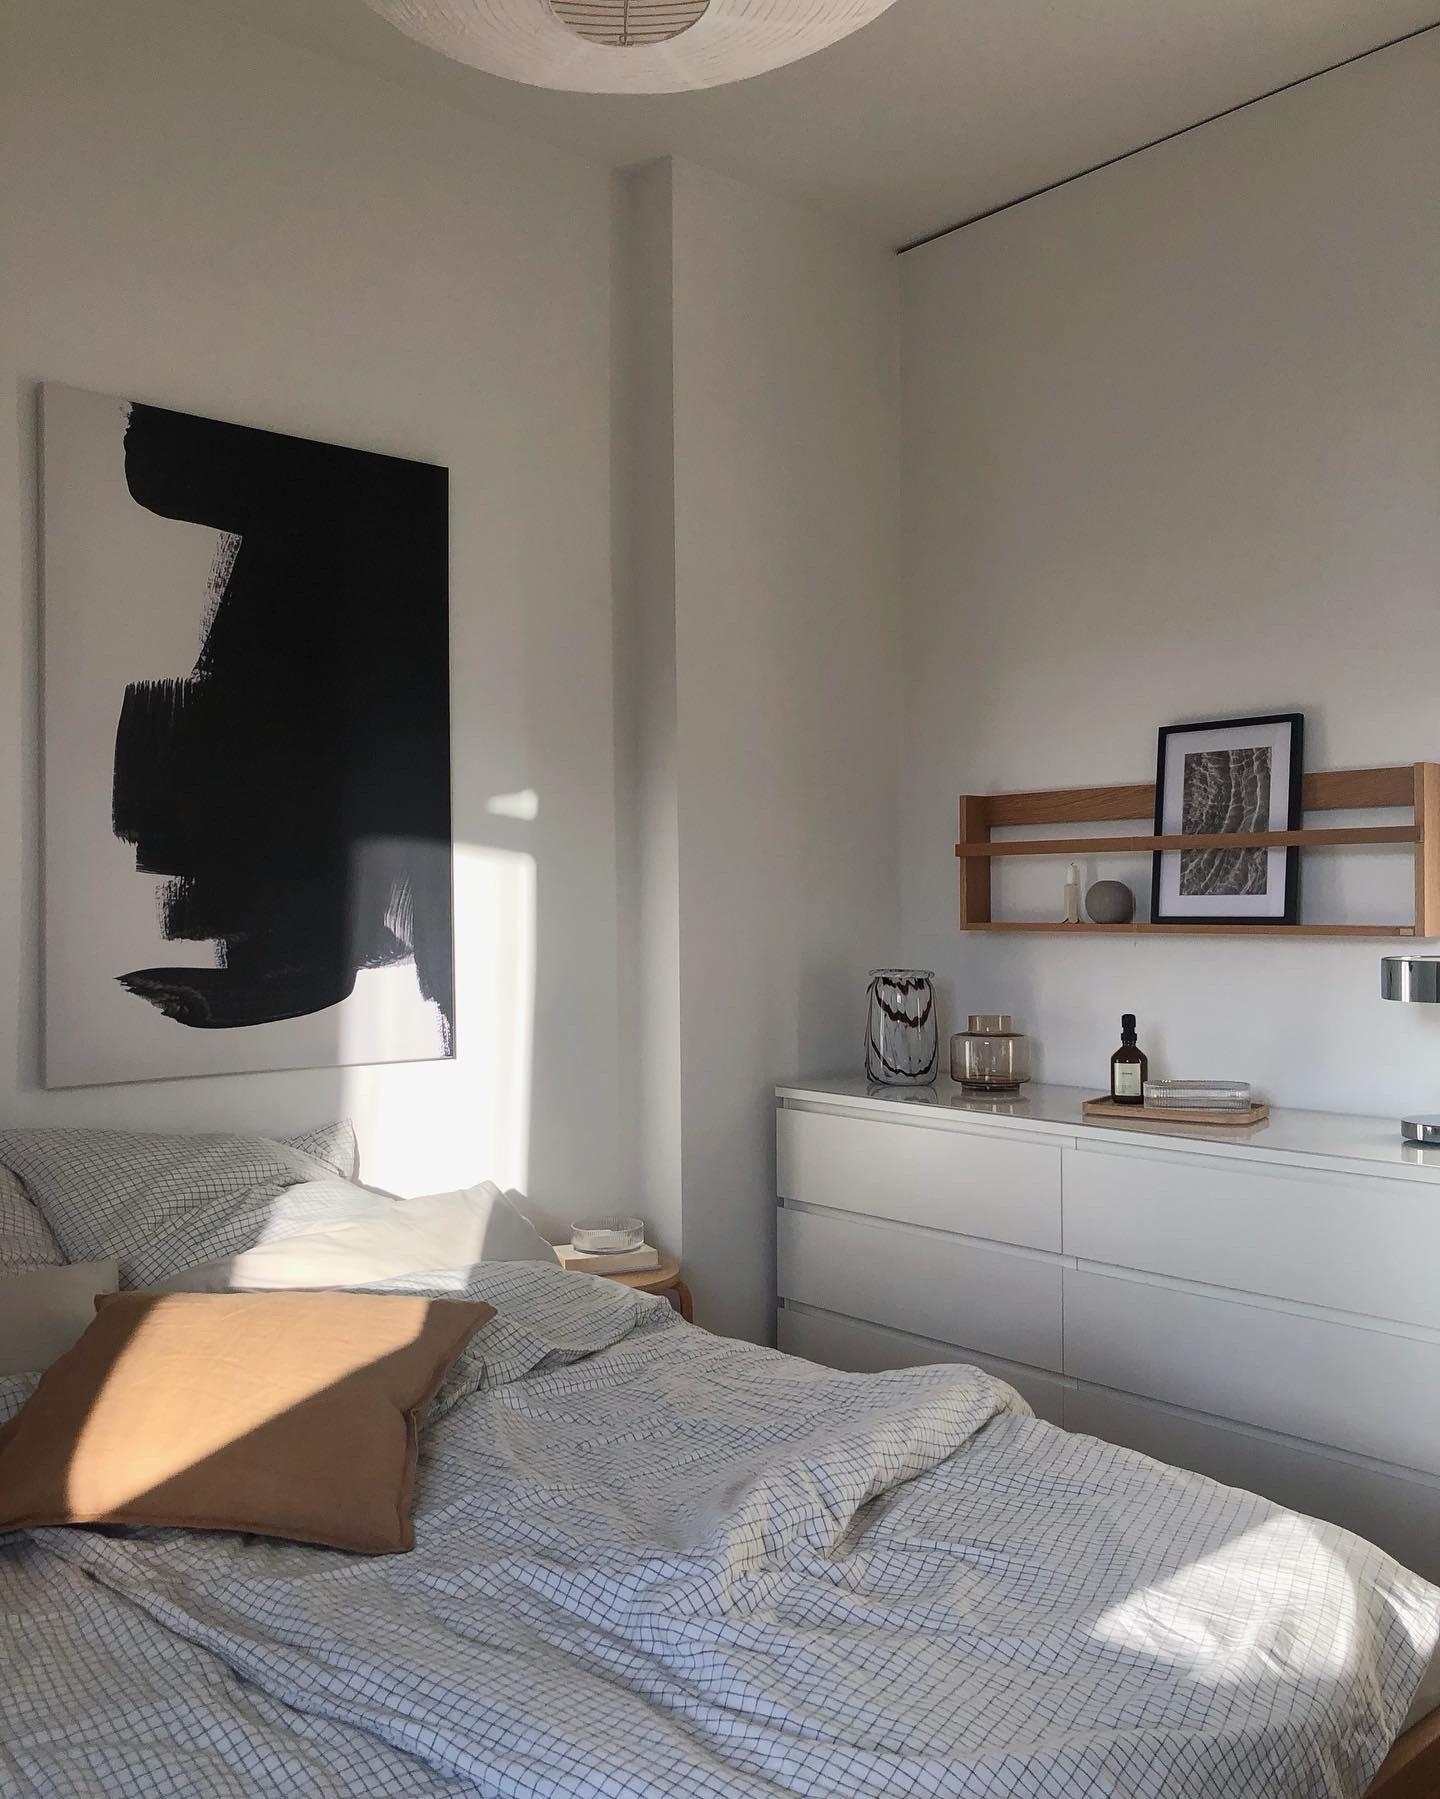 #schlafzimmer #schlafzimmerinspo #bedroom #bett #wanddeko #nordicliving #scandi #minimalism #home #couchstyle